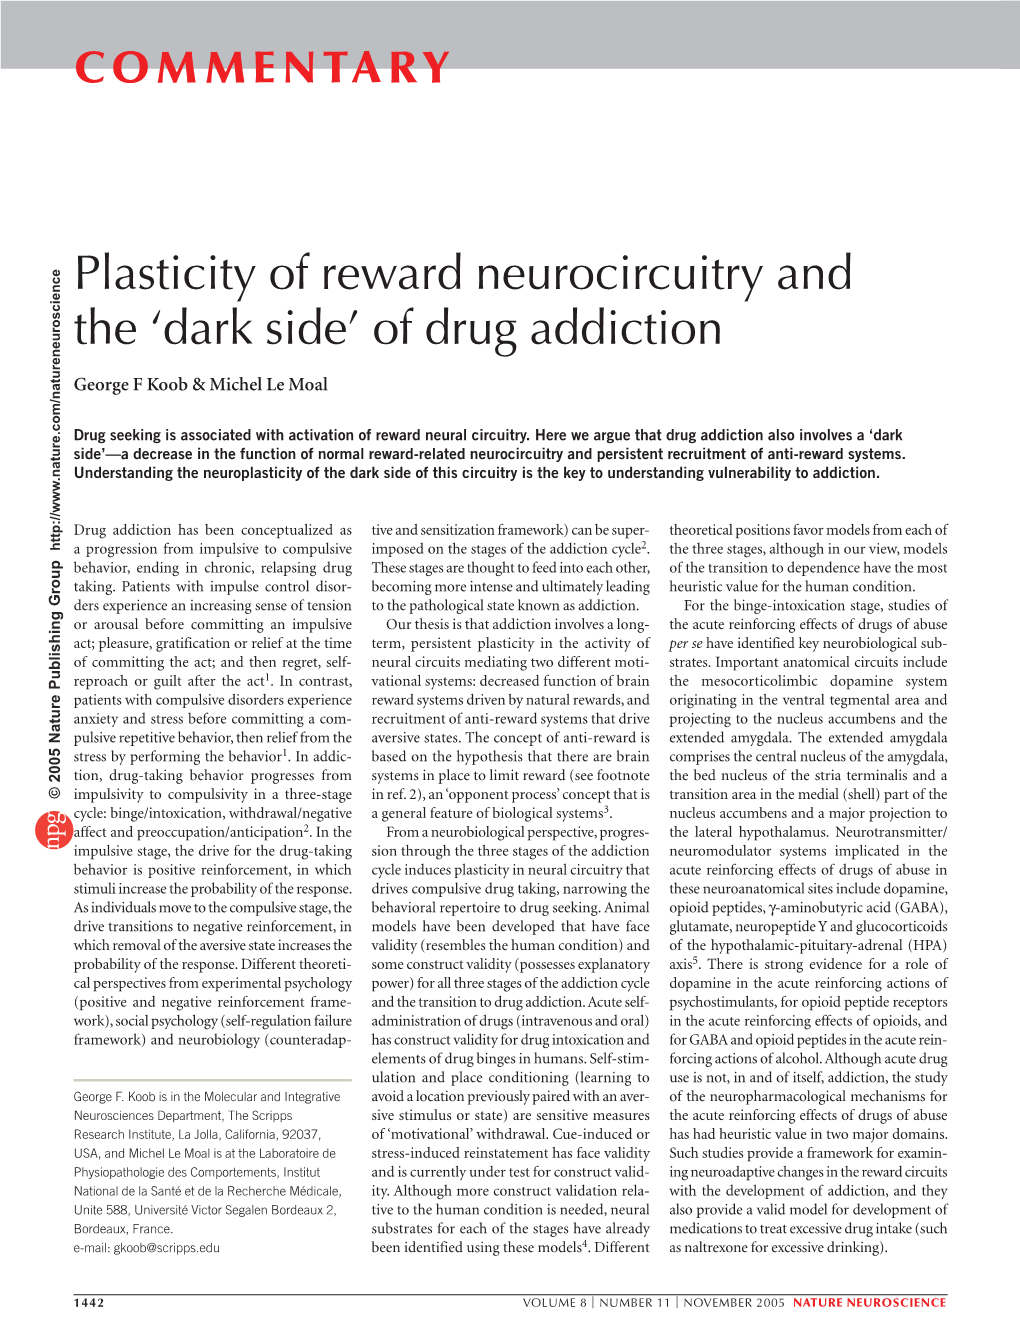 Plasticity of Reward Neurocircuitry and the 'Dark Side' of Drug Addiction